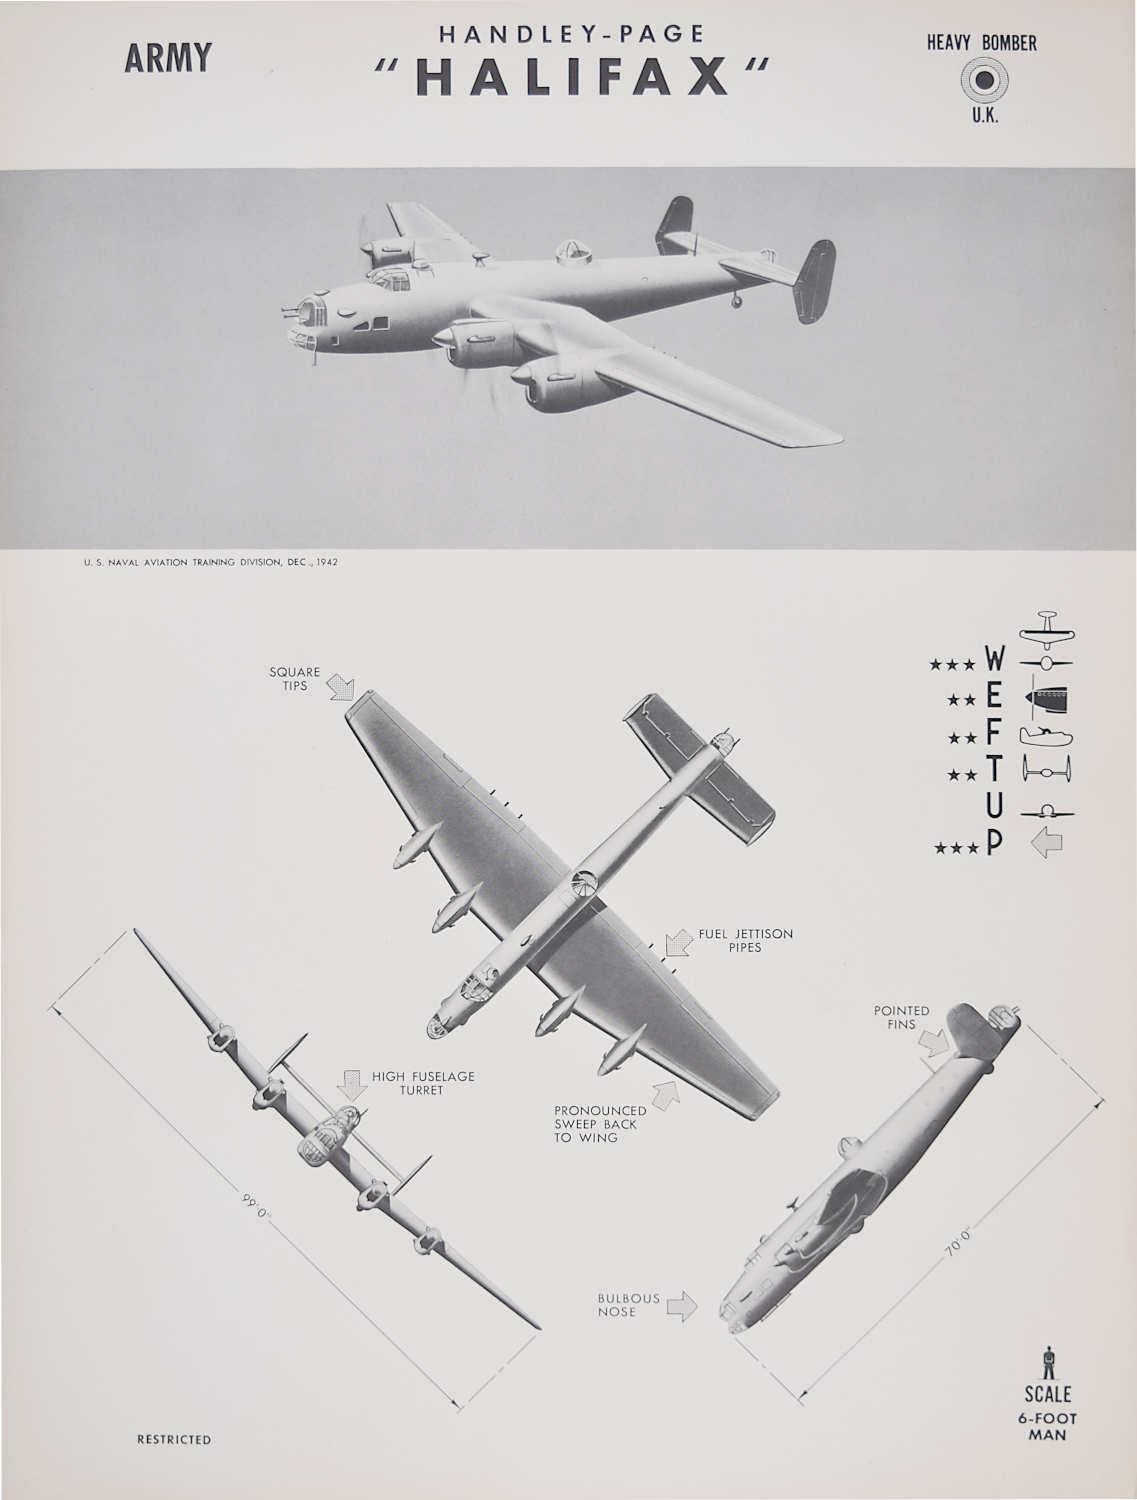 1942 Handley-Page Halifax Heavy Bomber RAF aeroplane identifcation poster ww2 - Print by Unknown